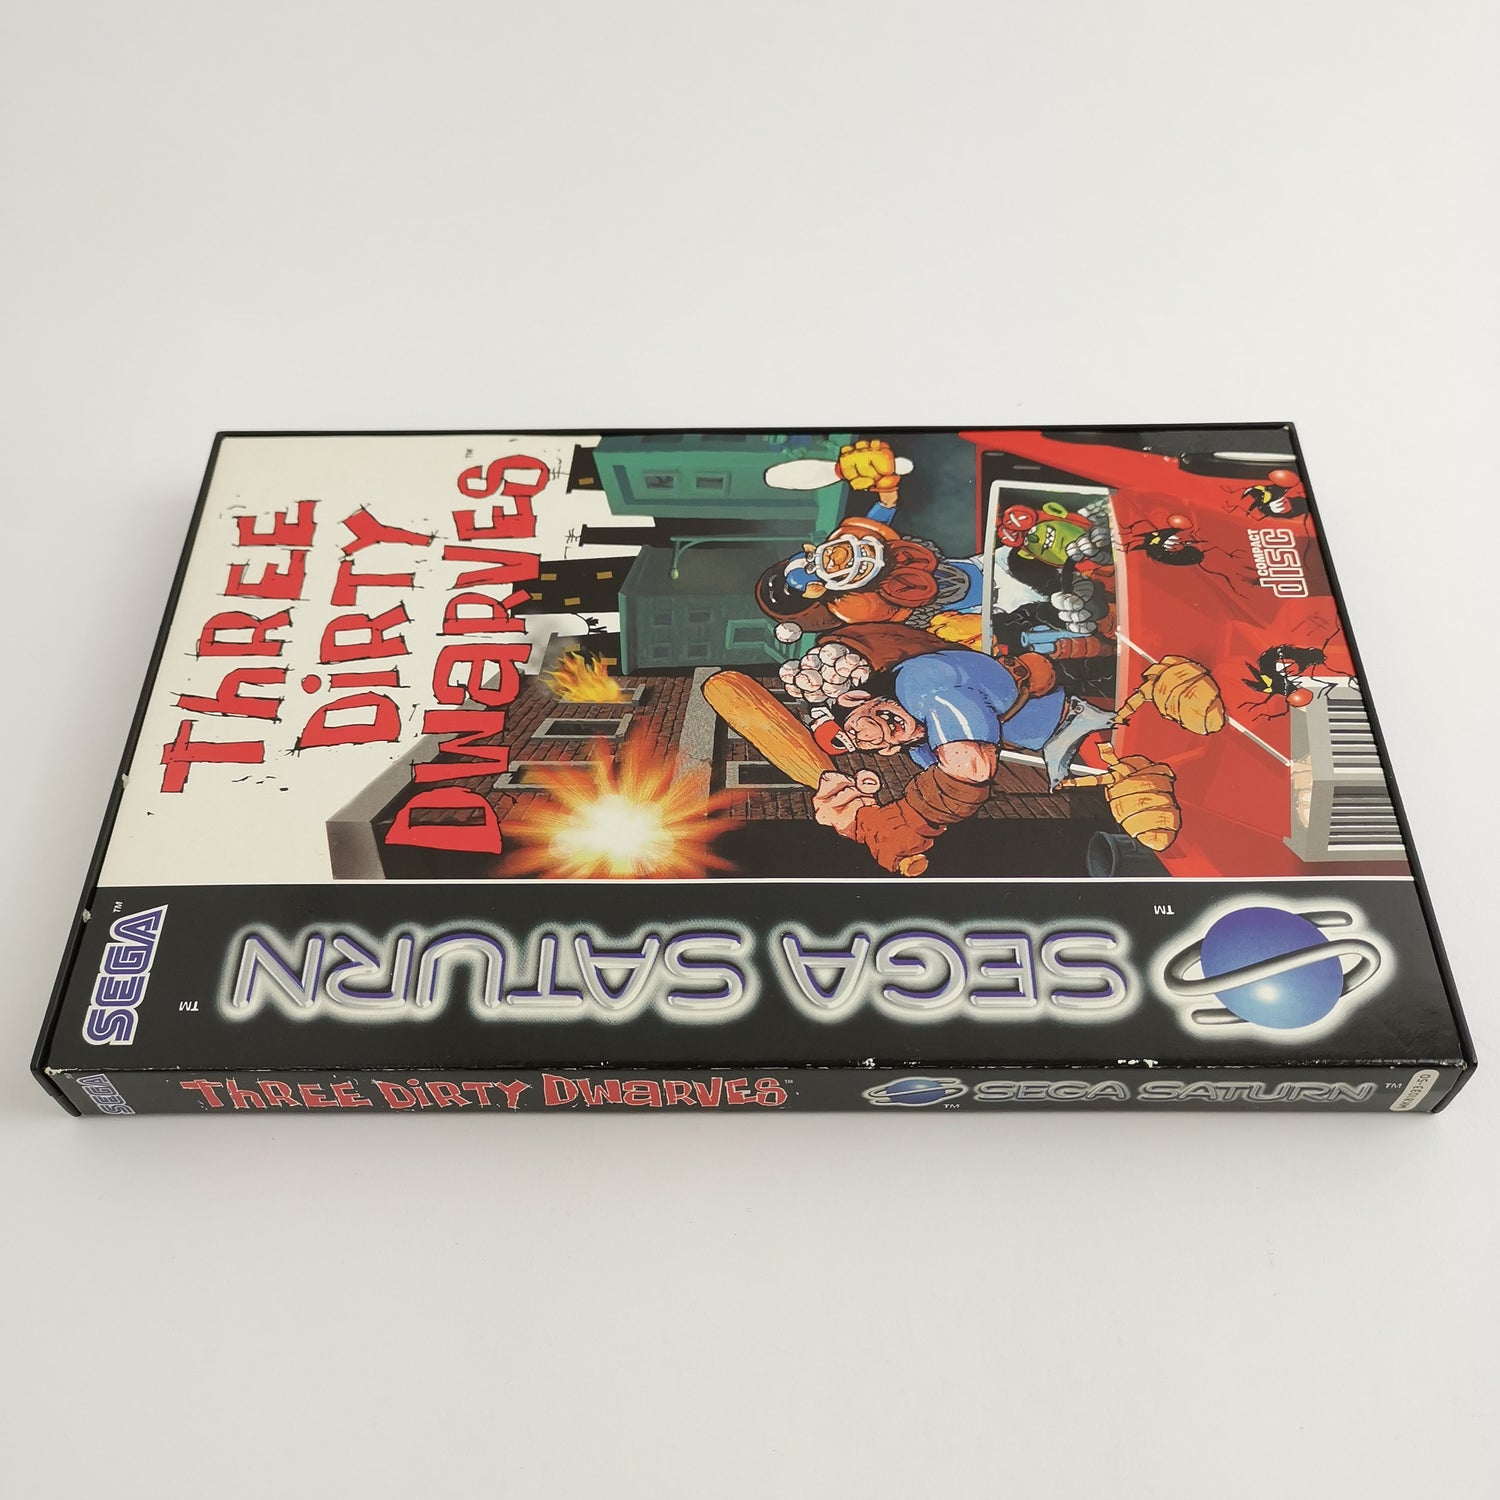 Sega Saturn Game: Three Dirty Dwarves - Original Packaging & Instructions | PAL version